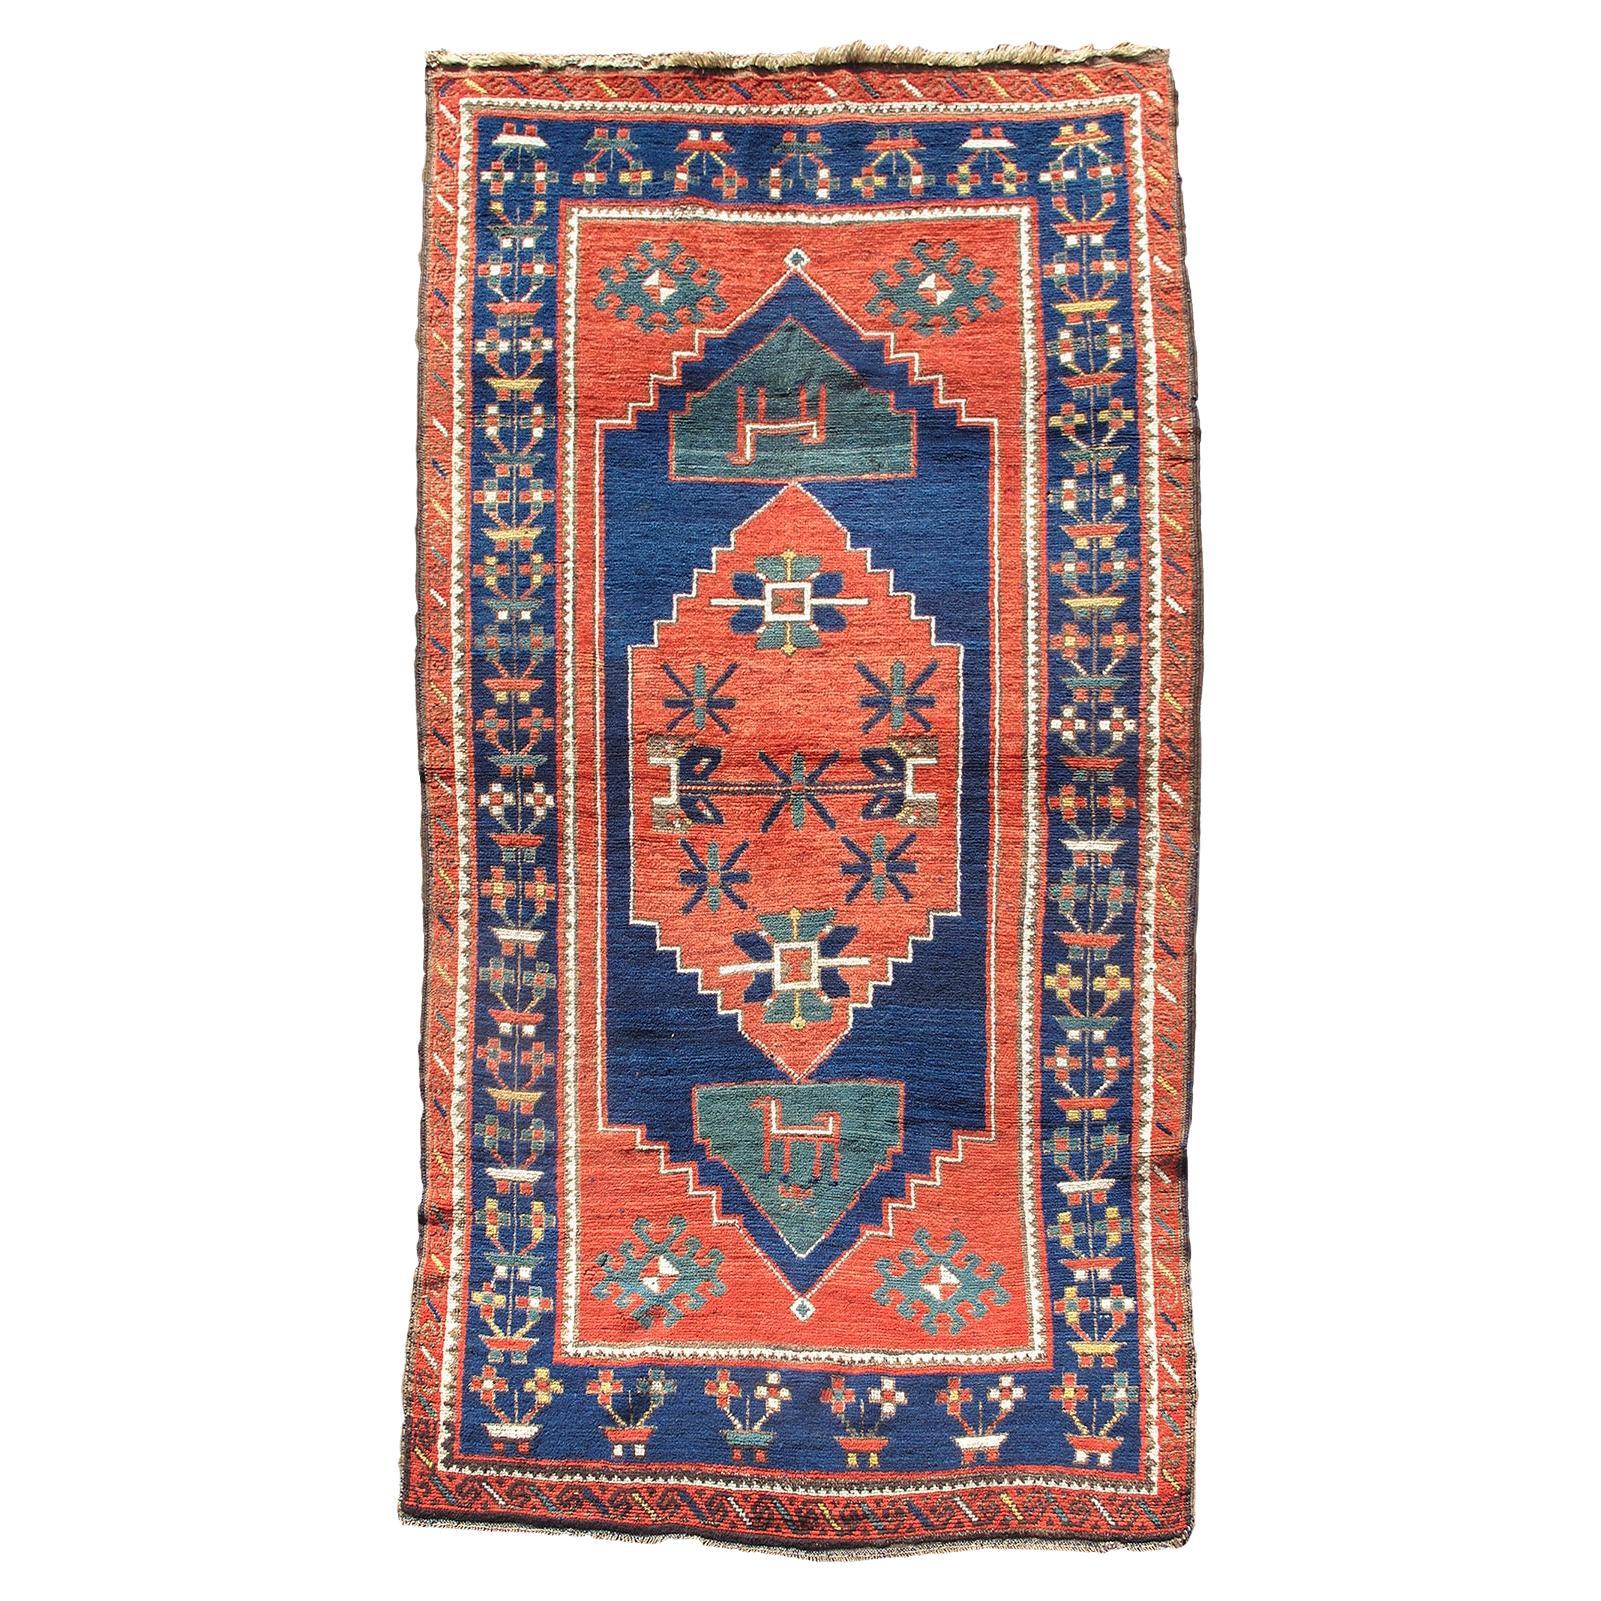 Antiker kaukasischer Karabagh-Teppich, Ende 19. Jahrhundert